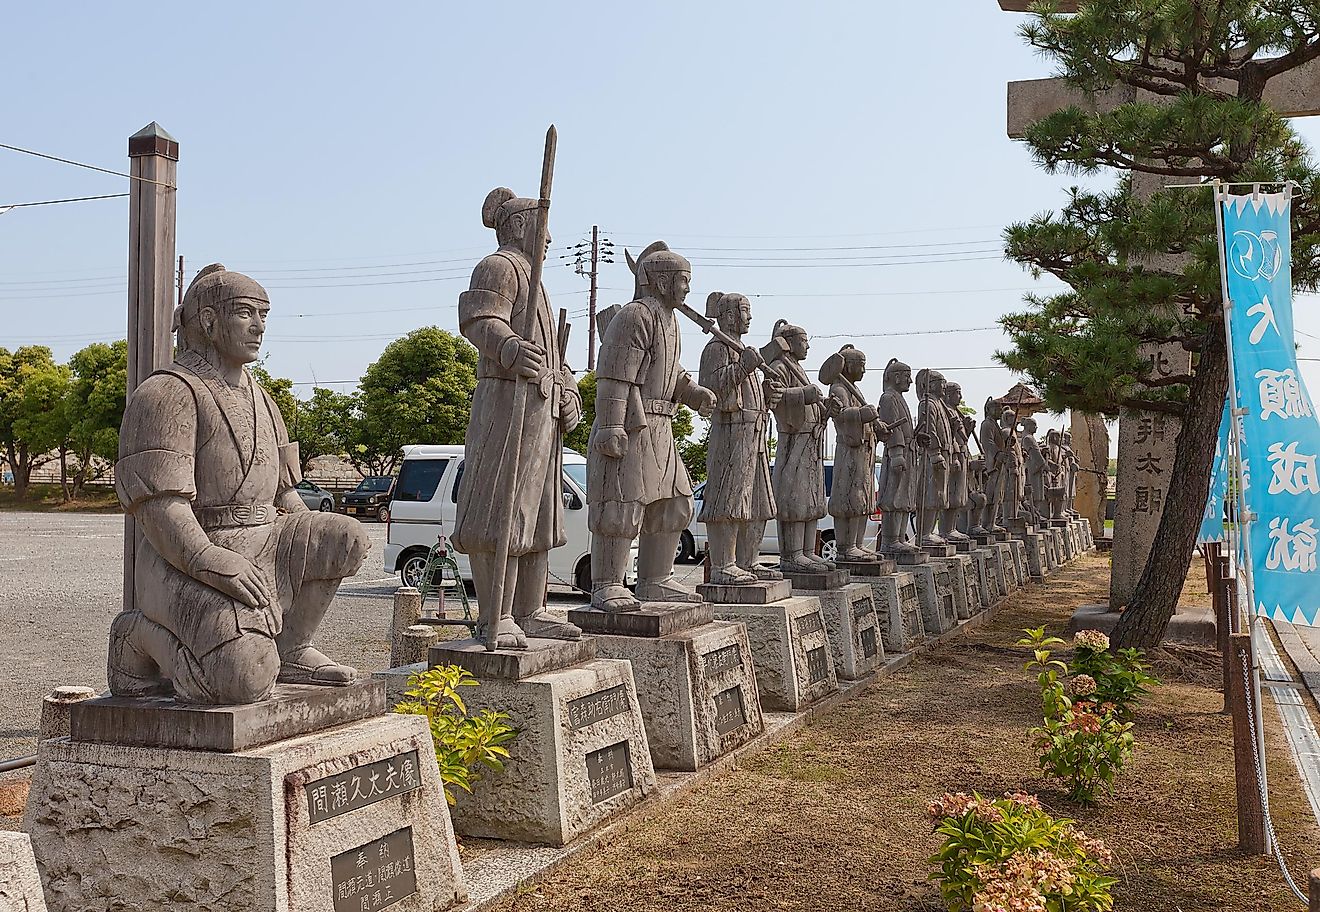 AKO, JAPAN - JULY 18, 2016: Statues of famous 47 ronin in the Oishi Shrine.  Image credit: Joymsk140 / Shutterstock.com